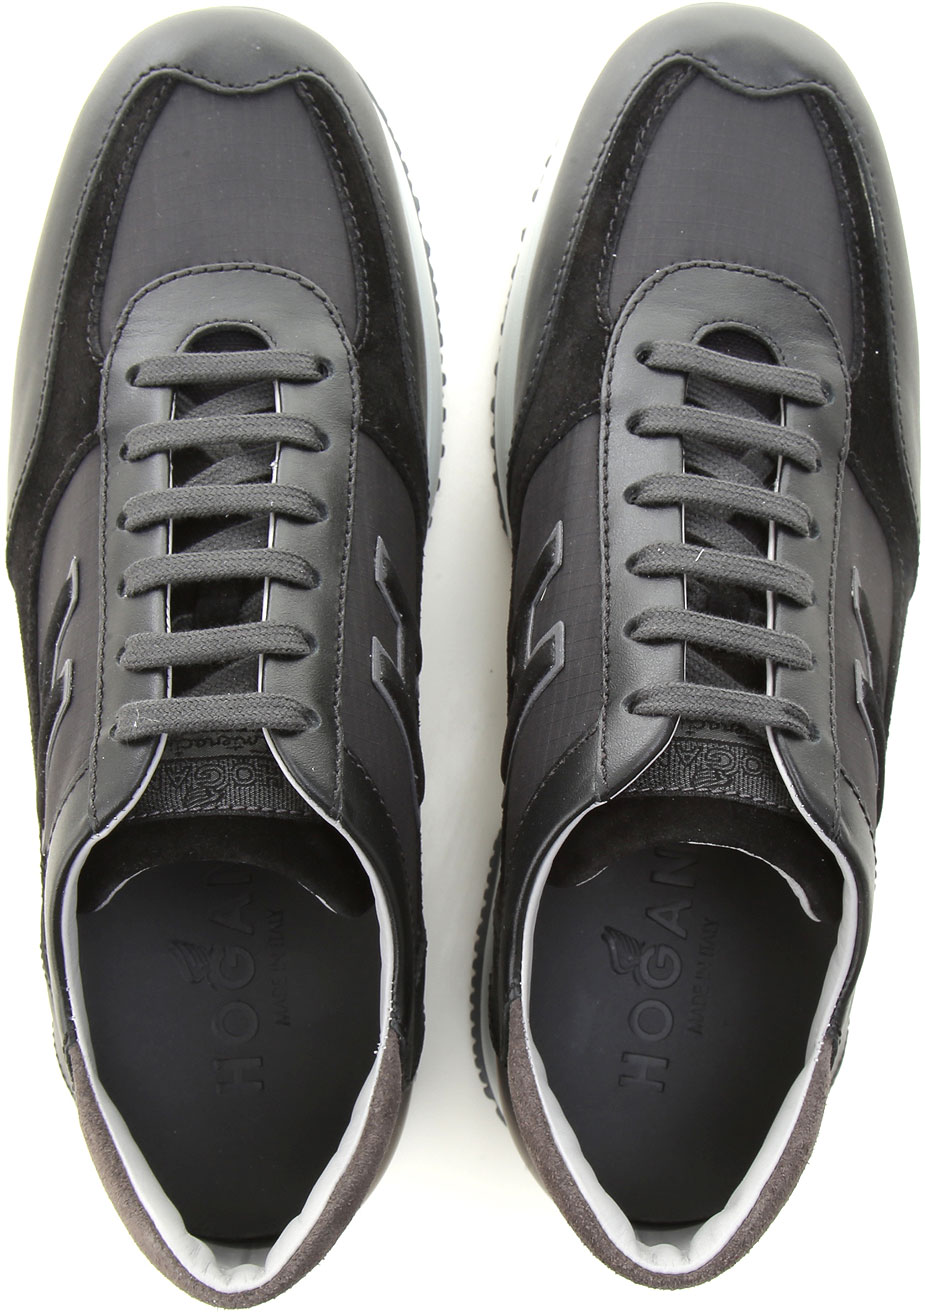 Mens Shoes Hogan, Style code: hxm00n0q101pdh175e--